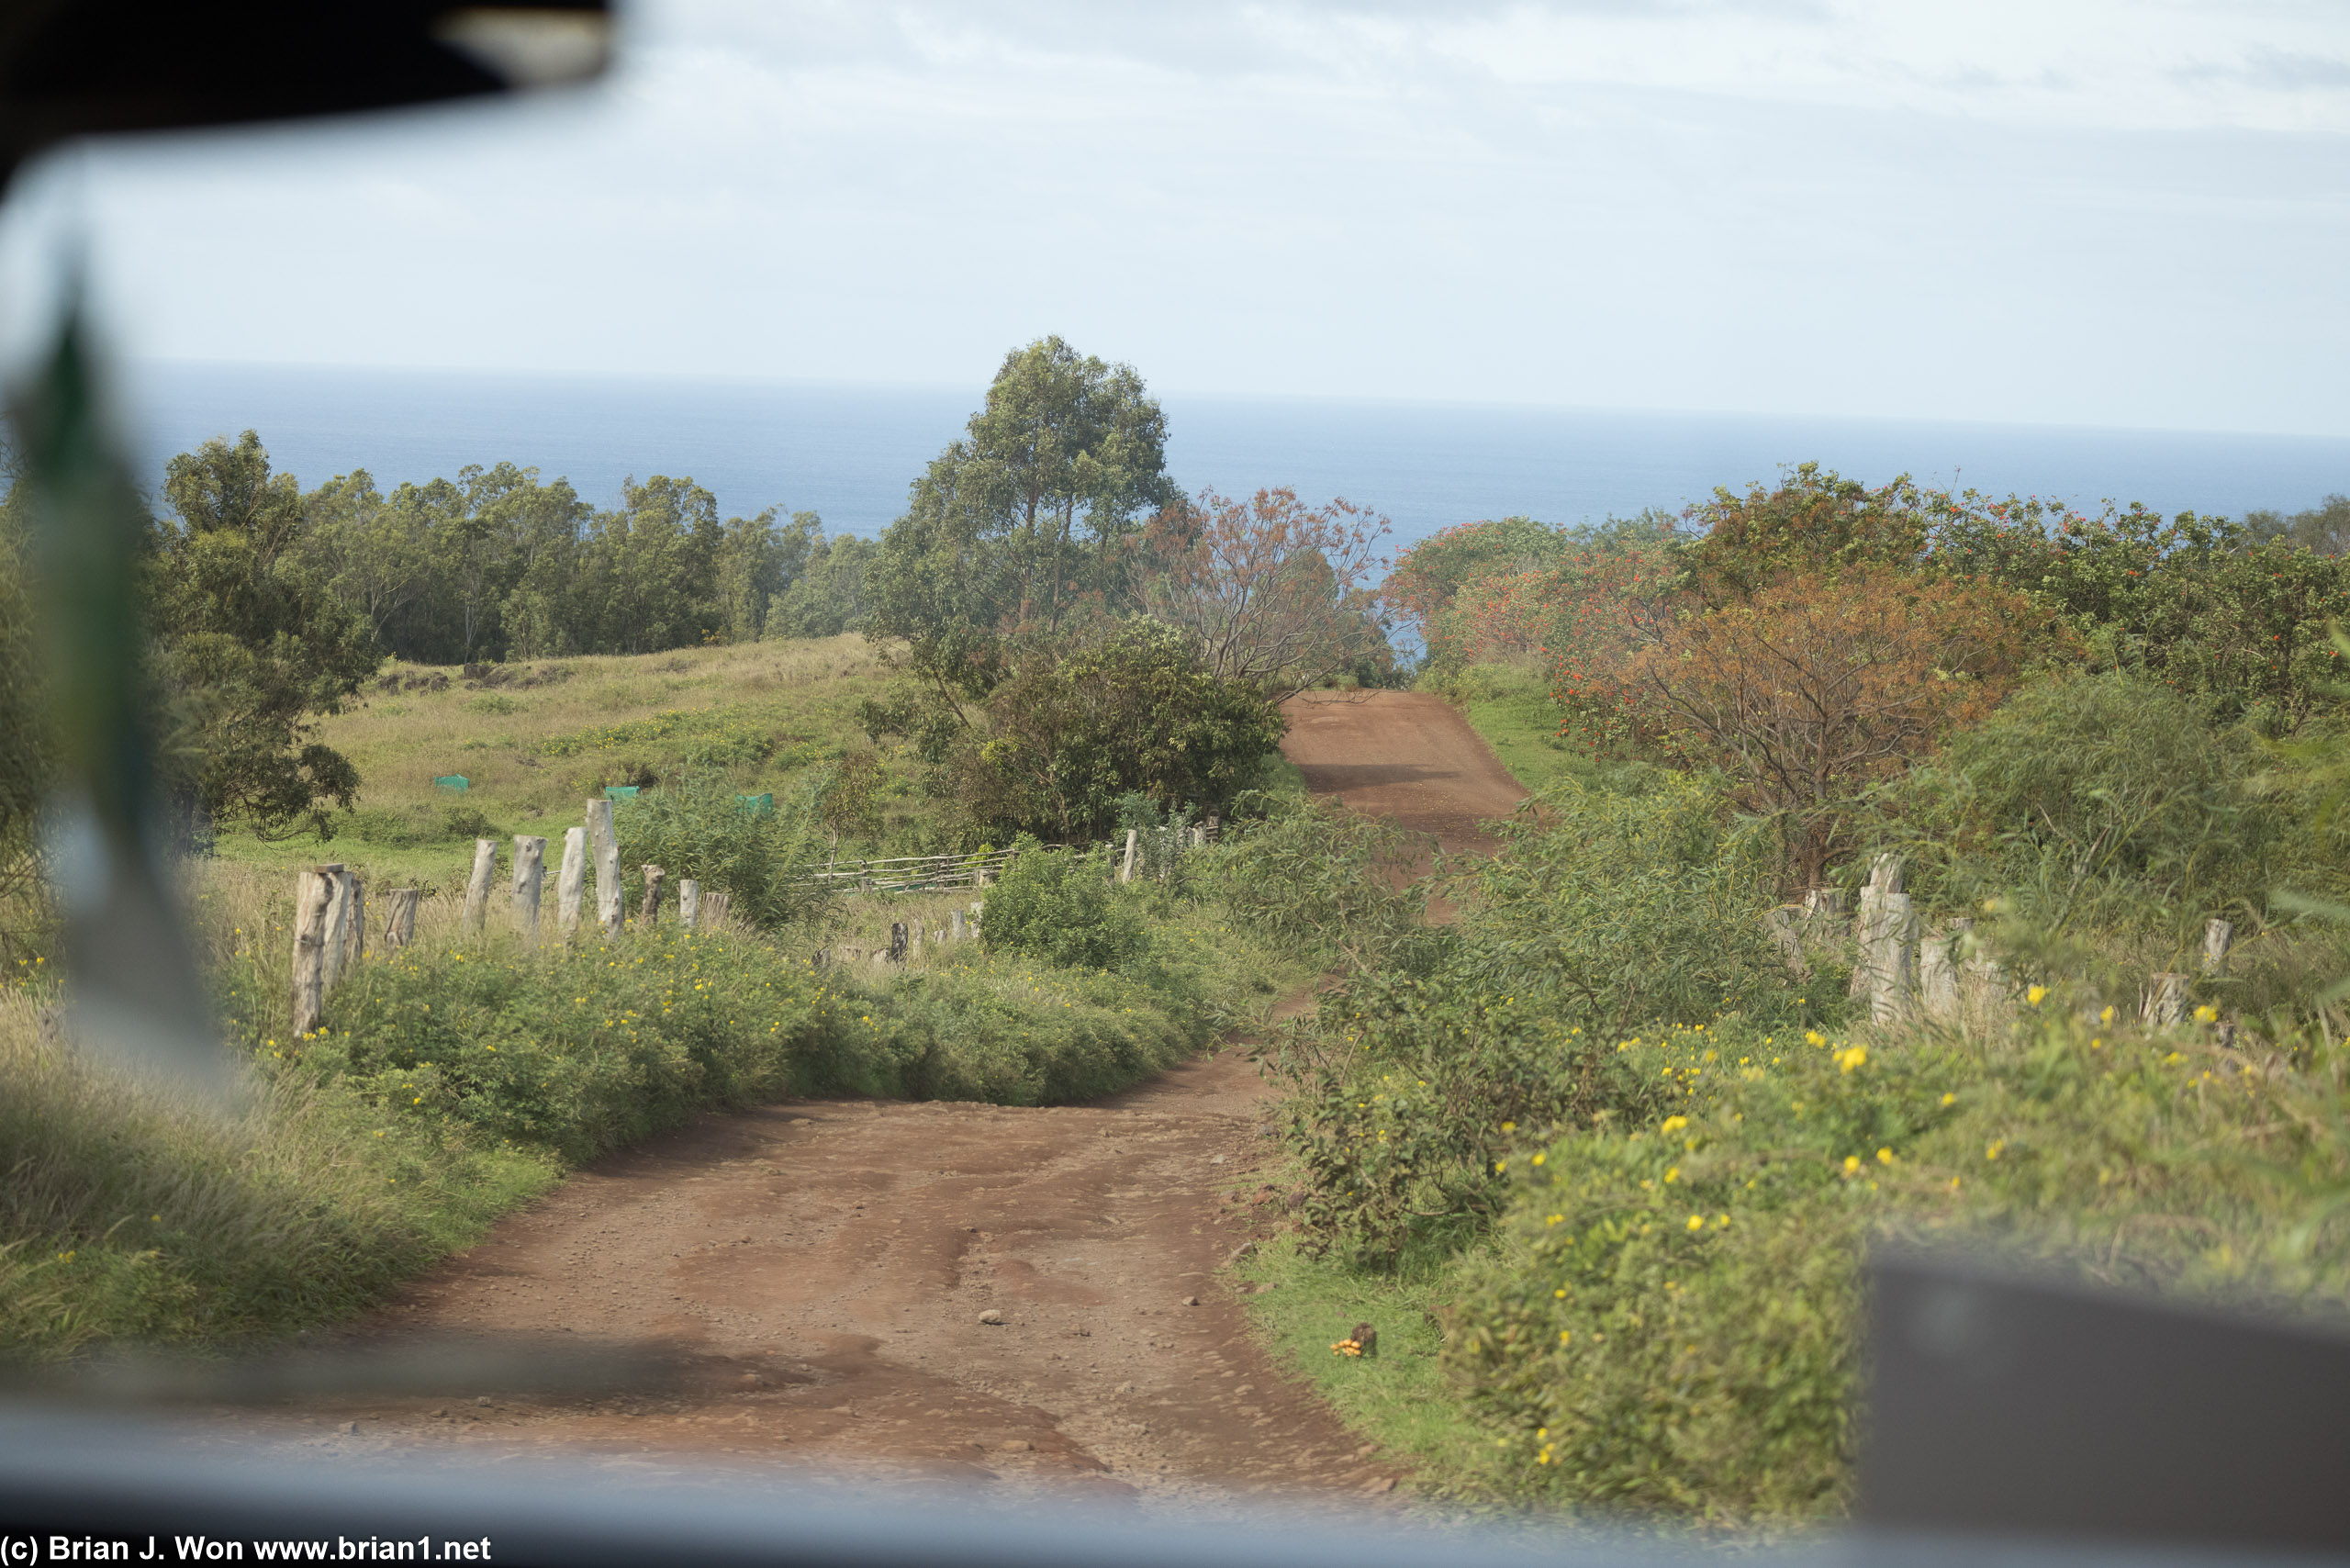 The road back to Explora Rapa Nui.